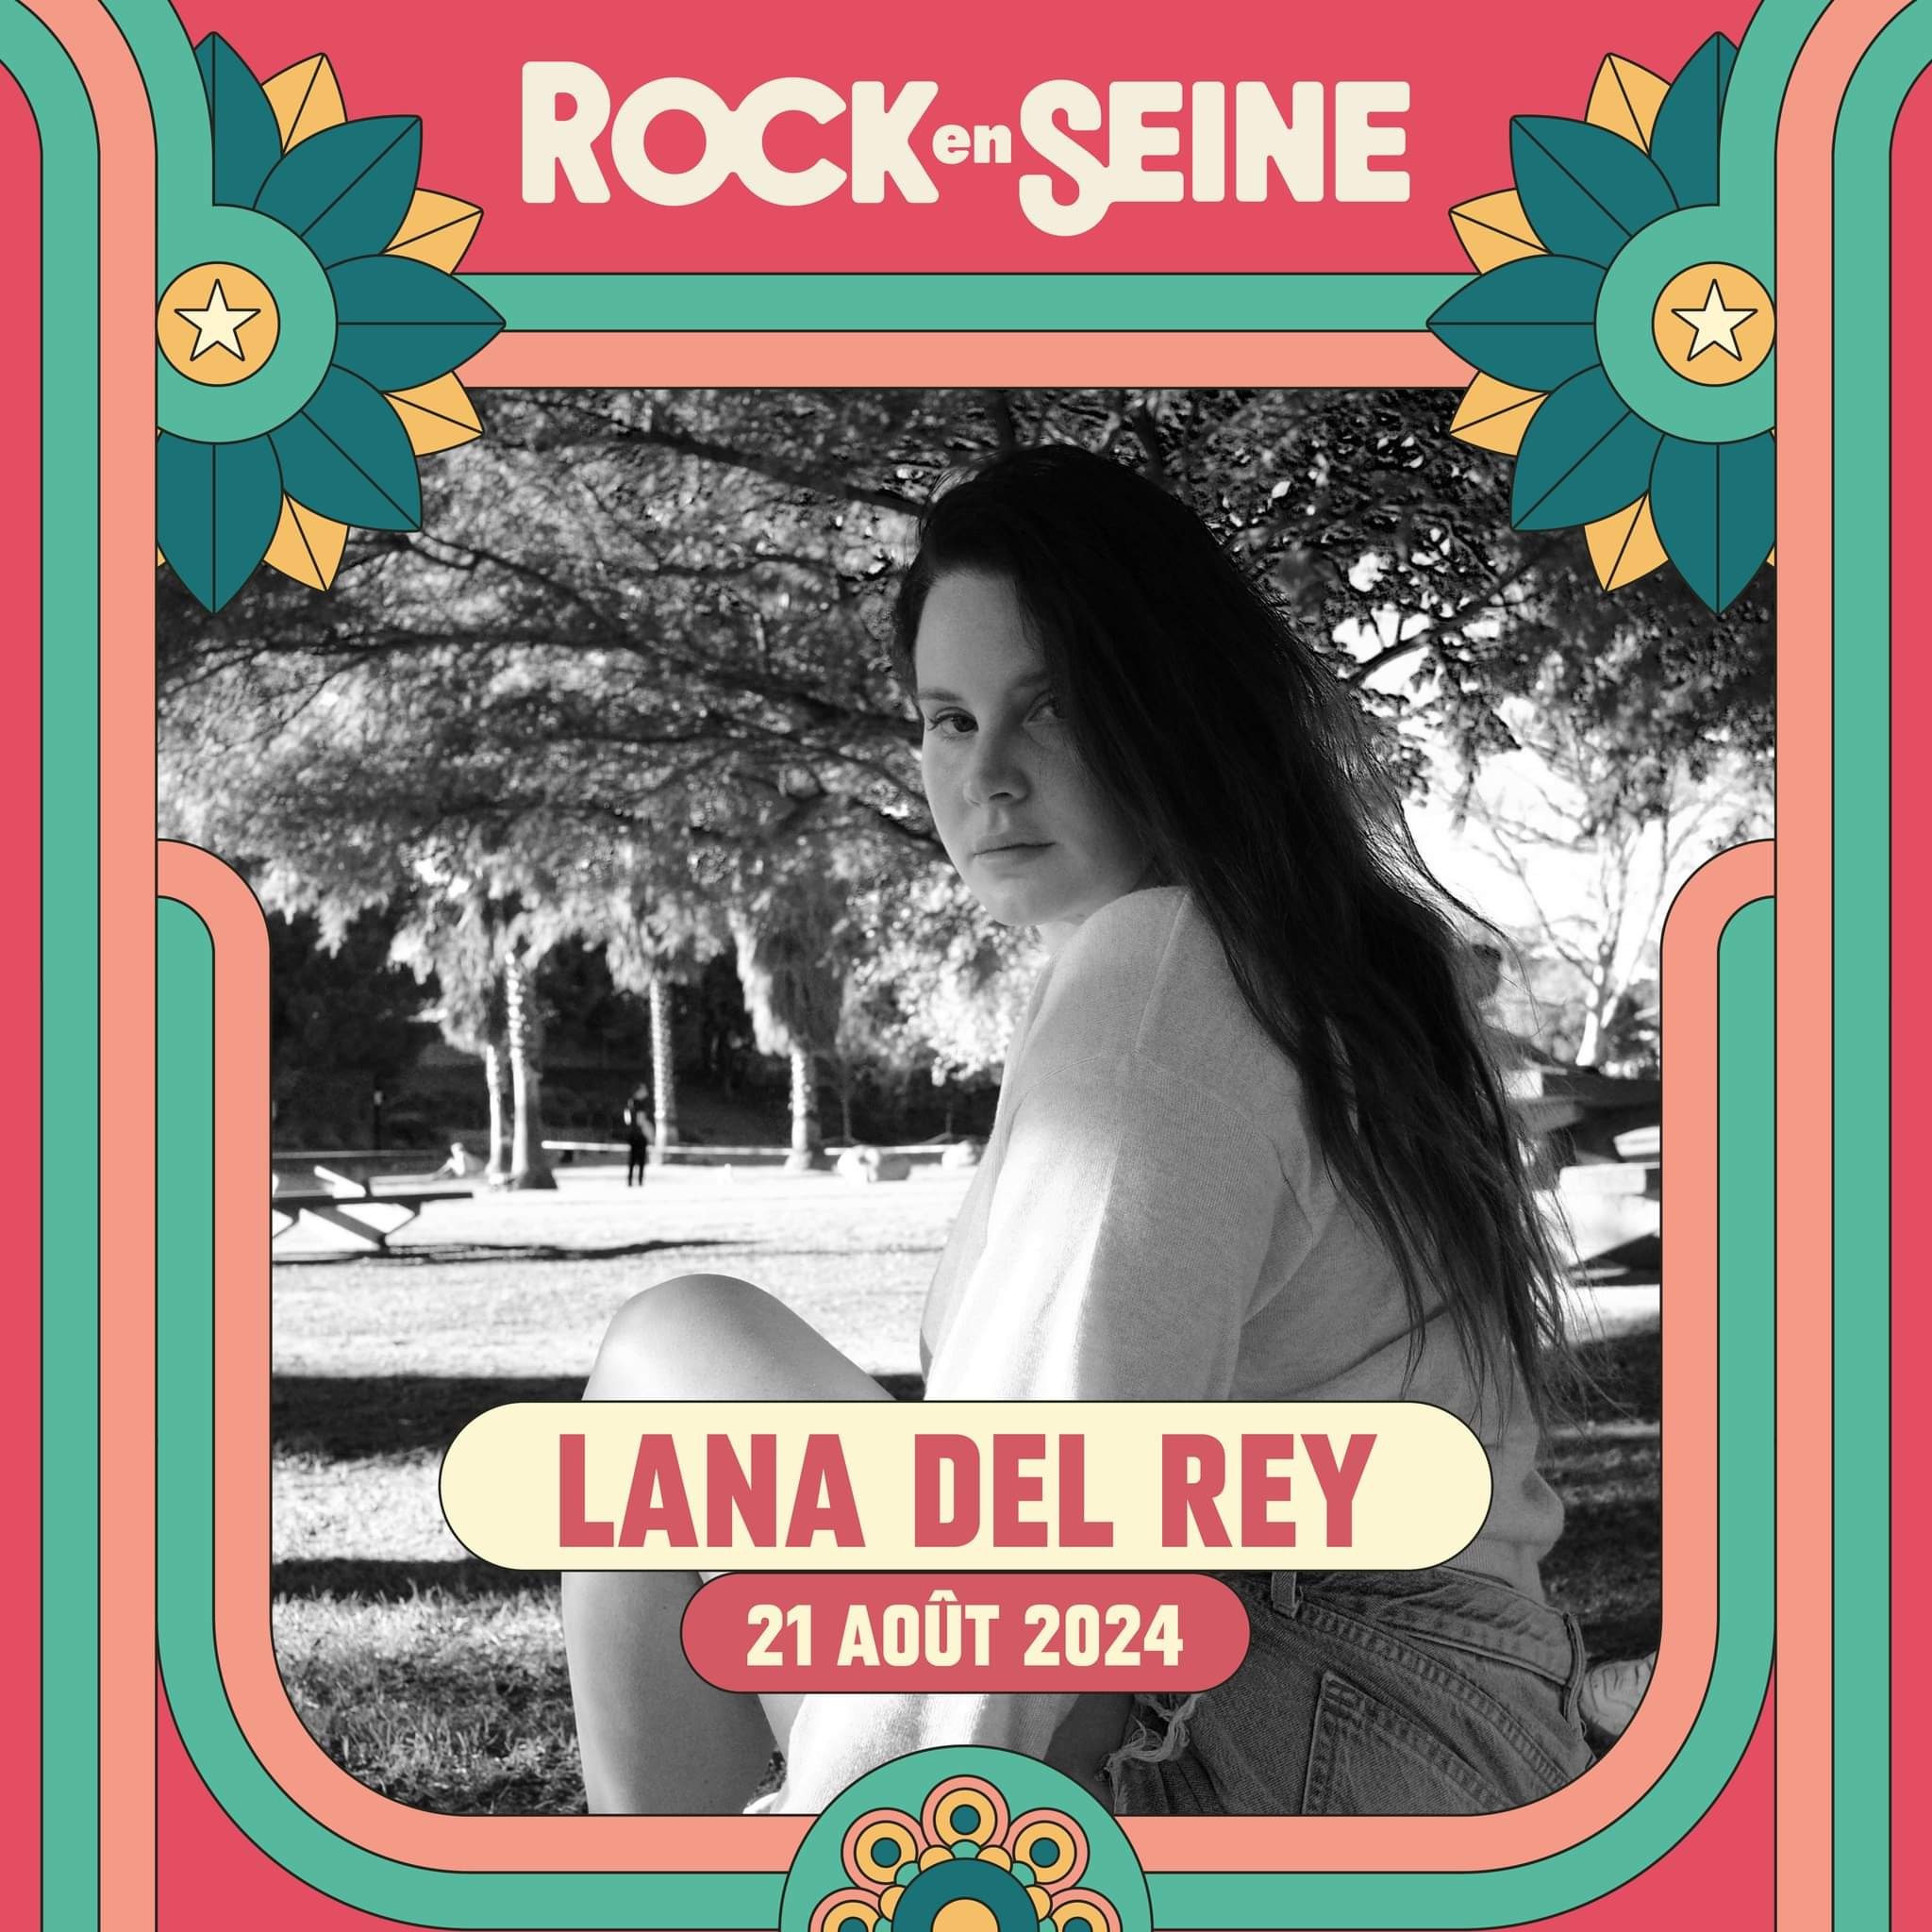 Rock en Seine 2024 : Lana Del Rey in der Domaine national de Saint-Cloud Tickets